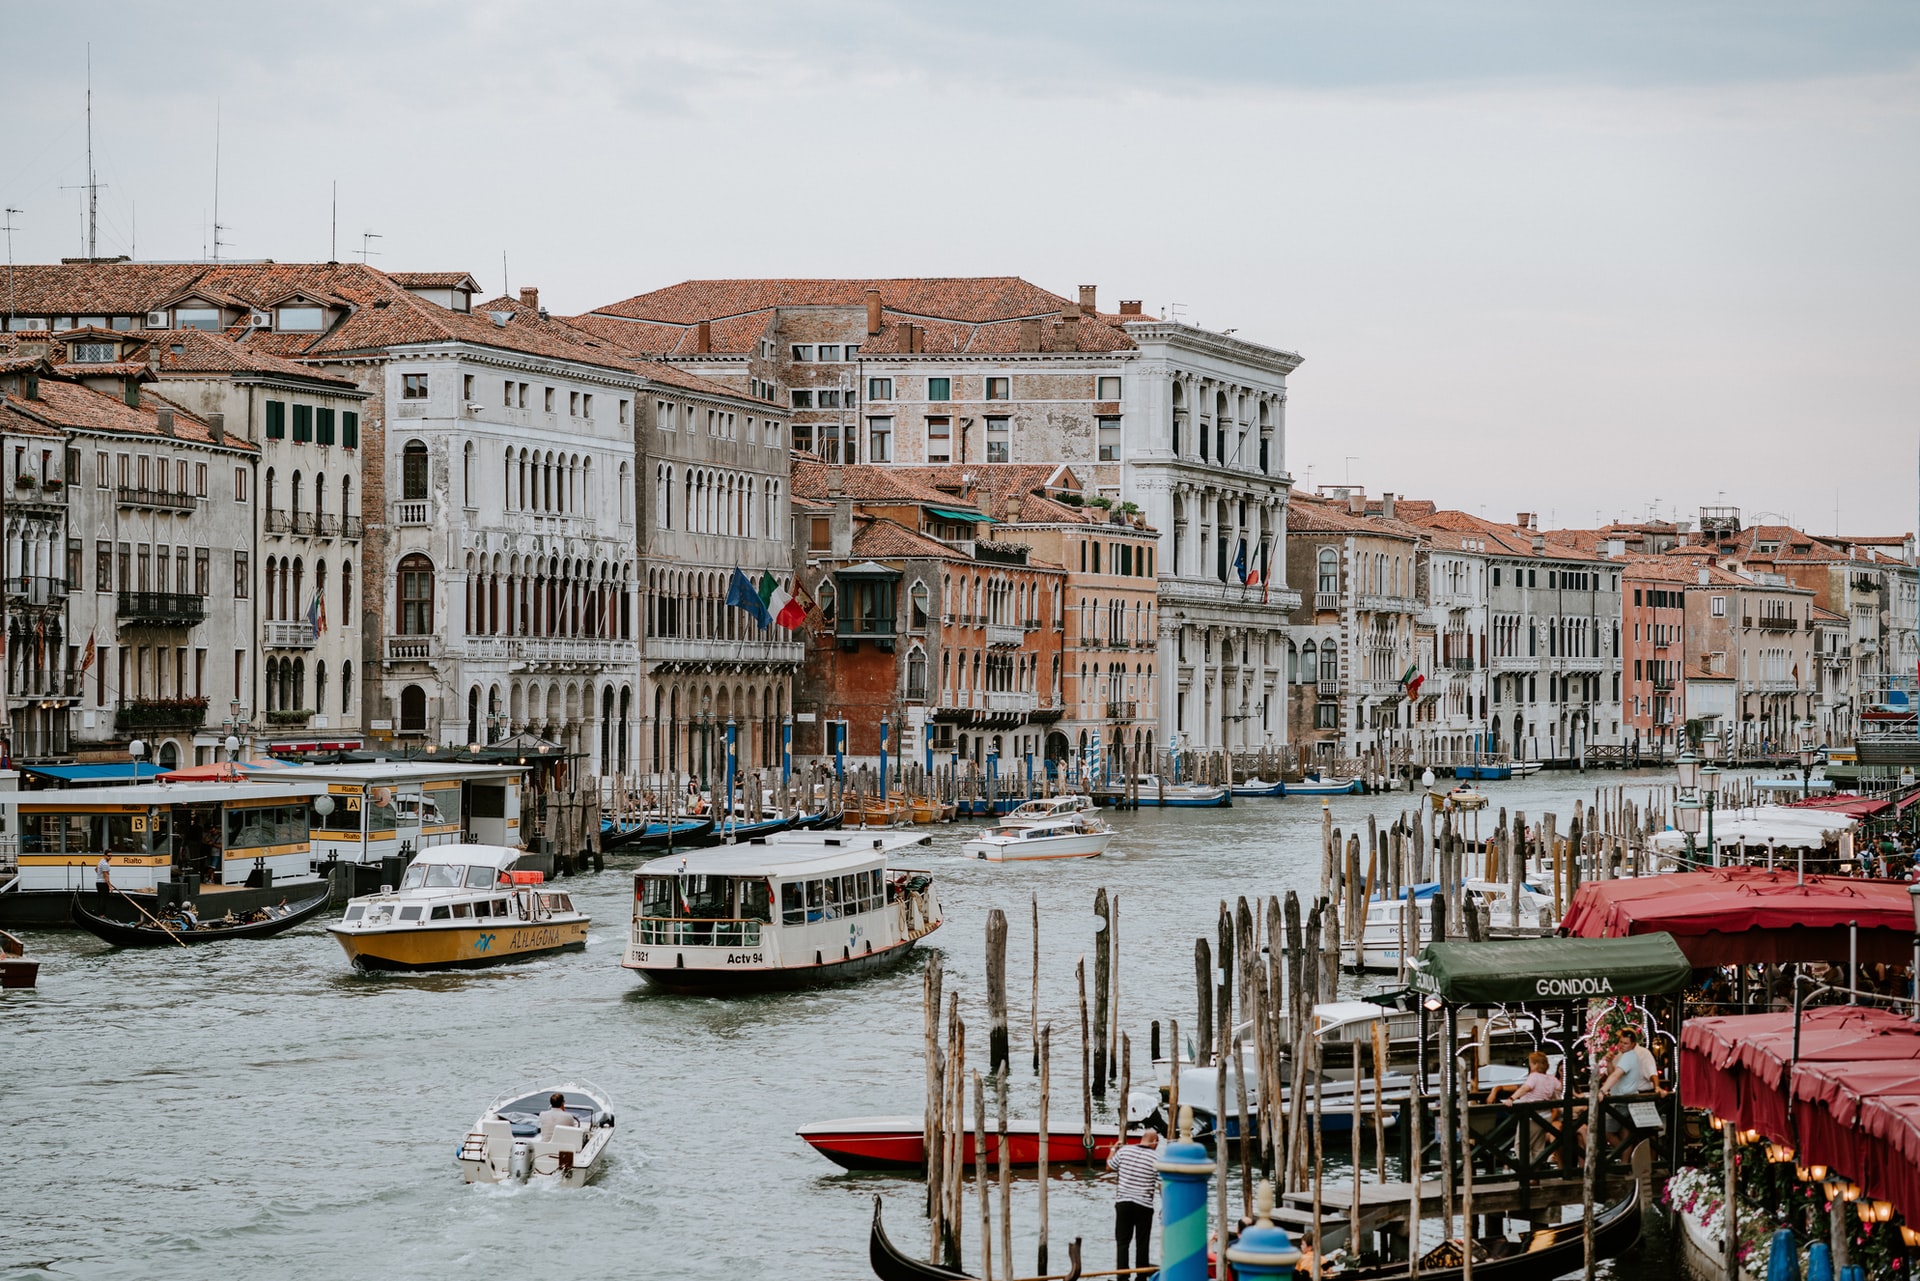 Grand Canal Venice Italy